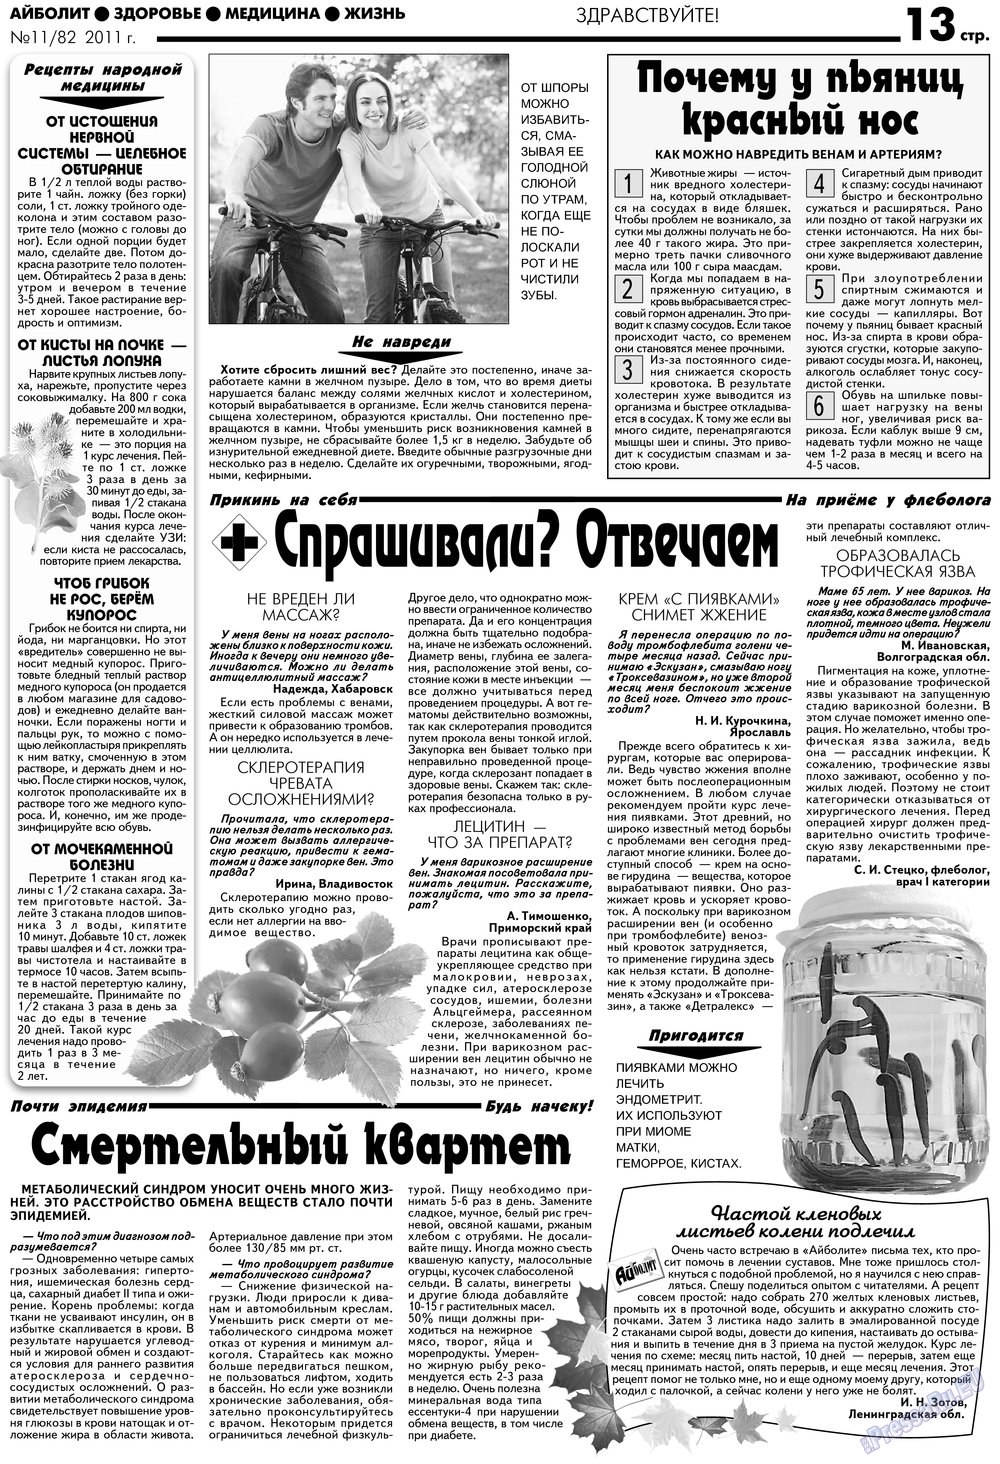 АйБолит (газета). 2012 год, номер 11, стр. 13